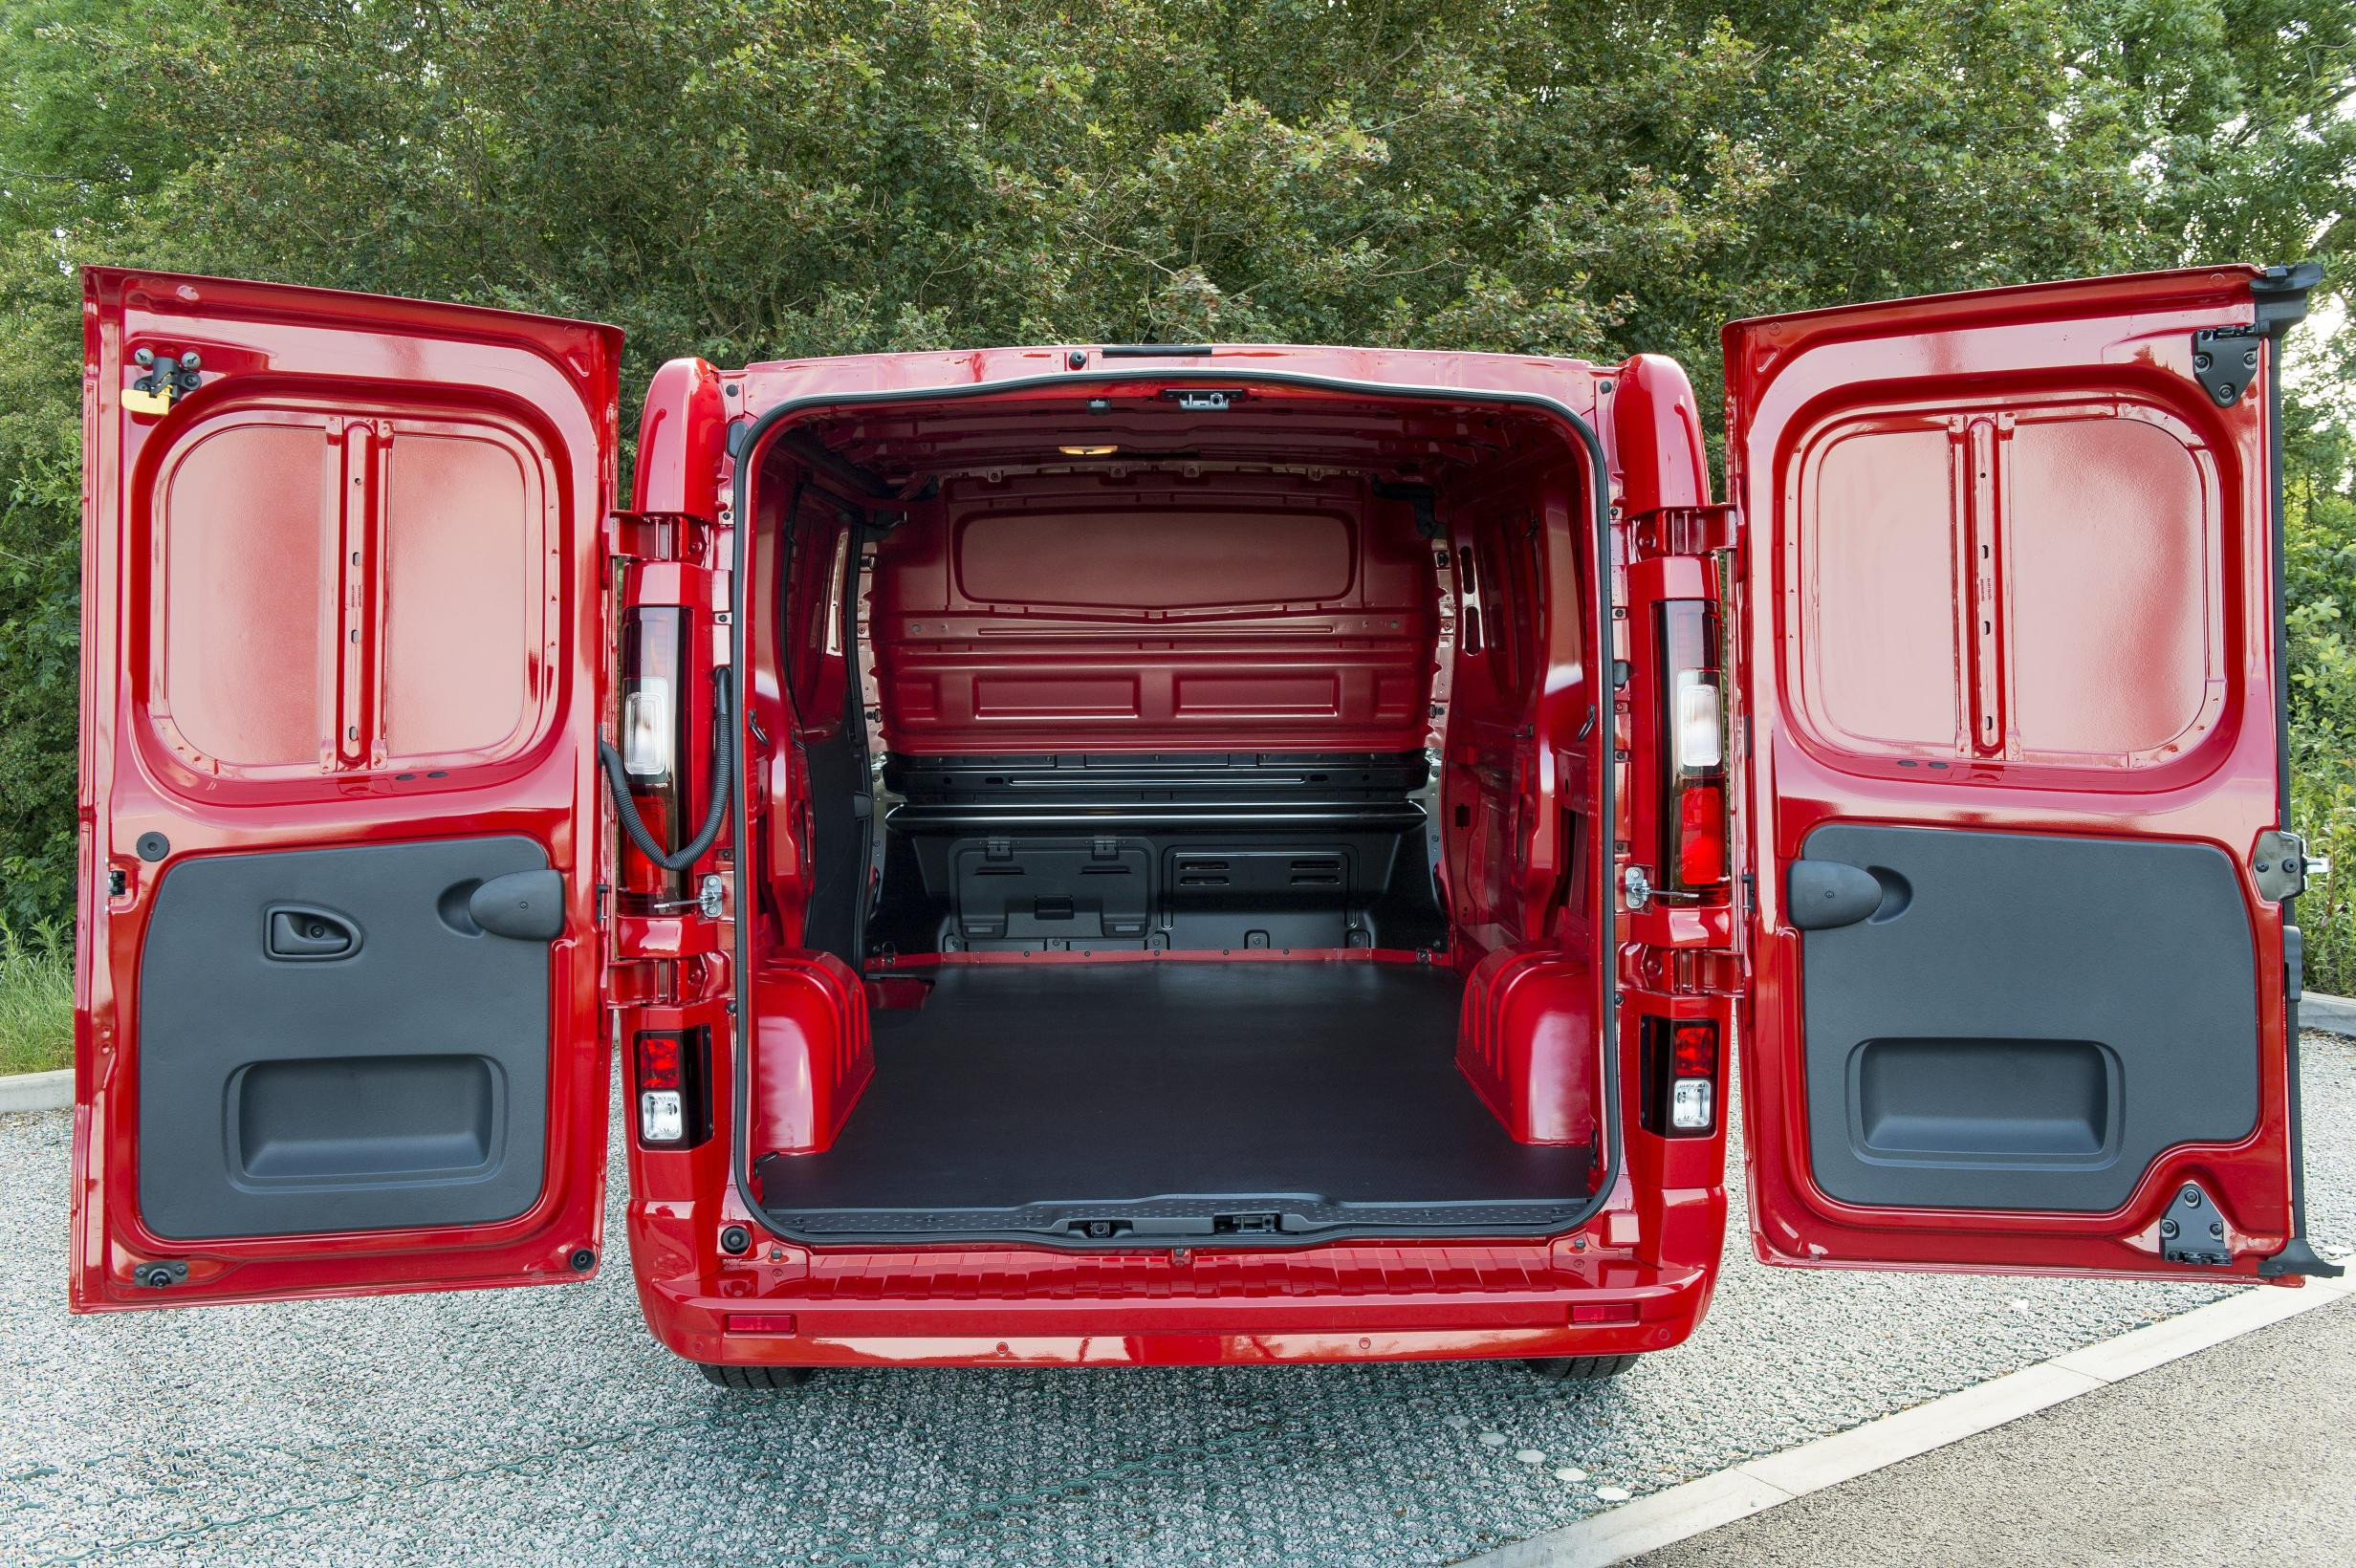 Rear shot of red Vauxhall Vivaro with both doors open